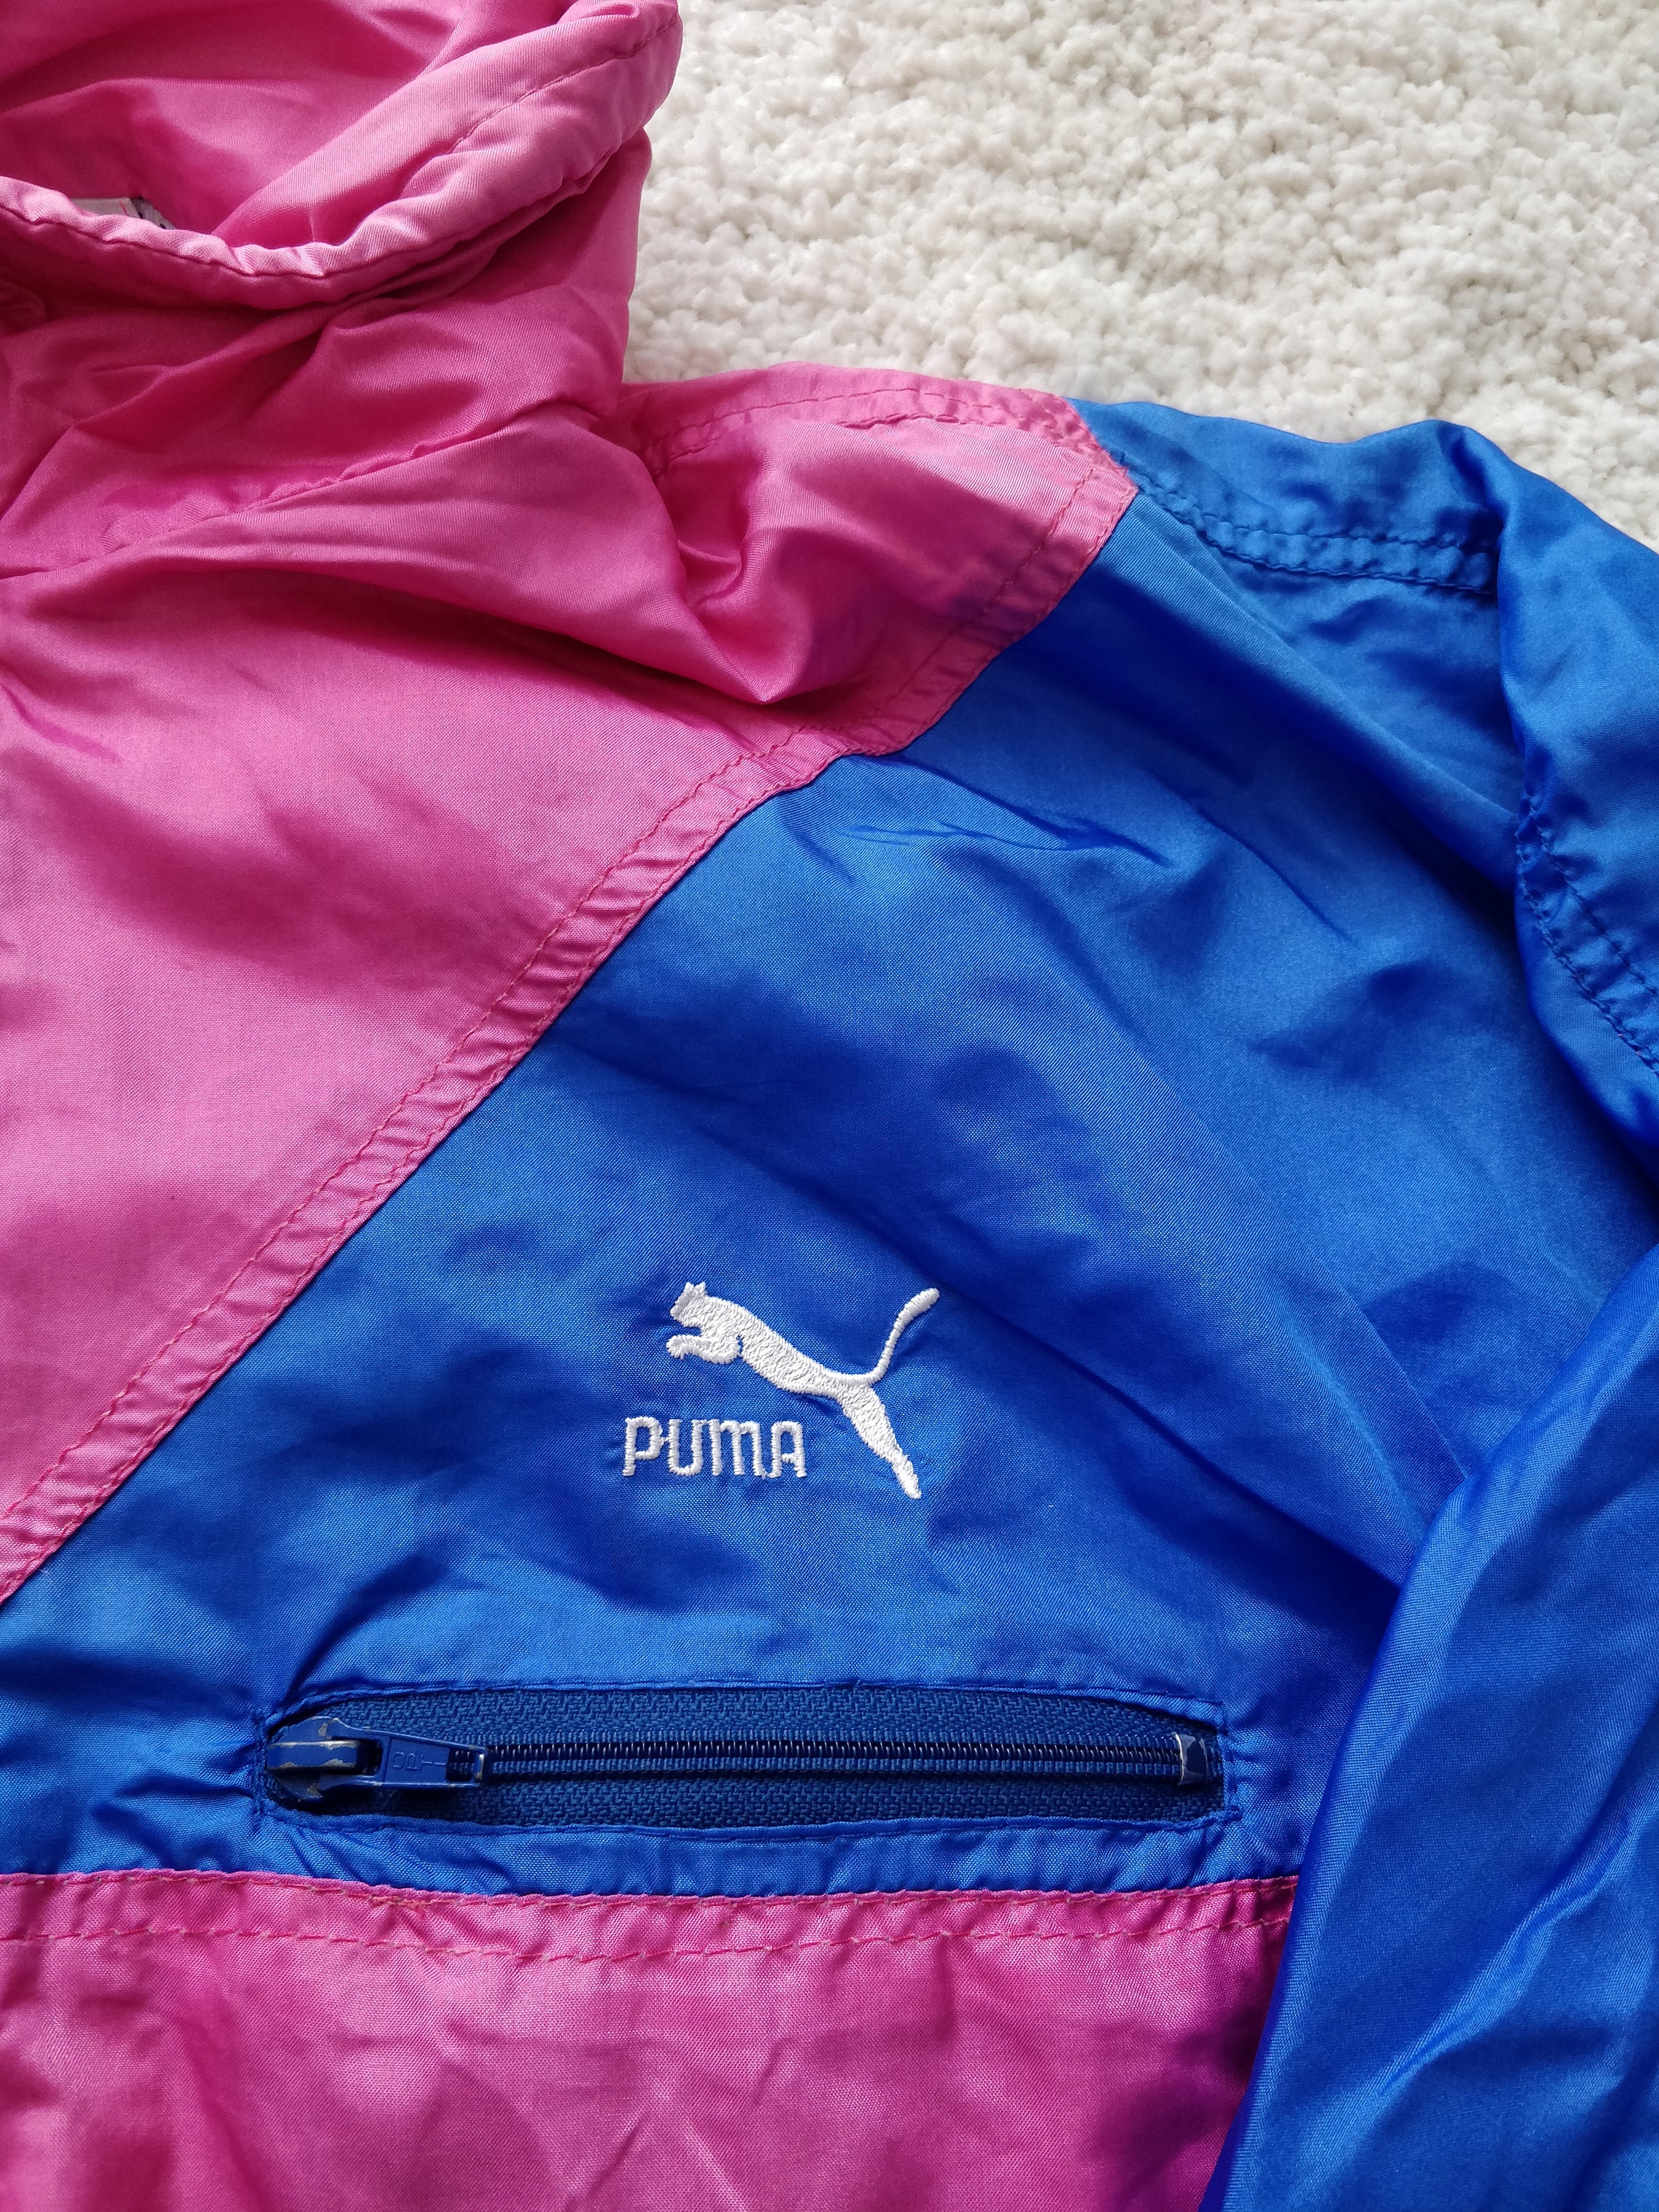 Puma Vintage Swiss Track Top Nylon Hooded Jacket Blue Pink | Etsy